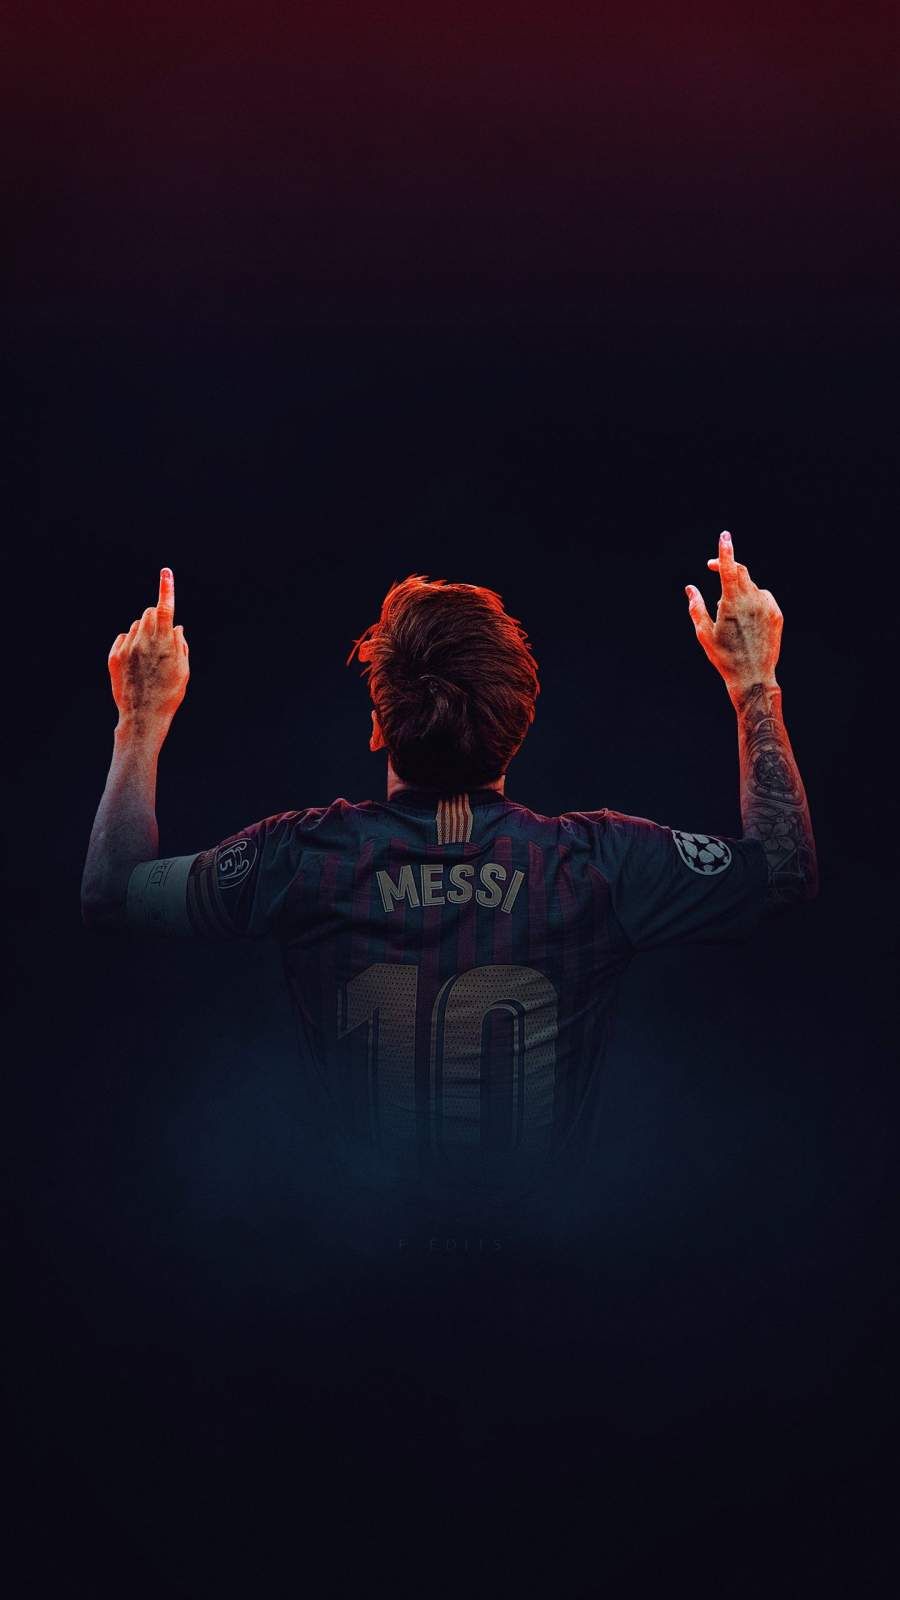  Messi Hintergrundbild 900x1600. Messi Goal IPhone Wallpaper Wallpaper : iPhone Wallpaper